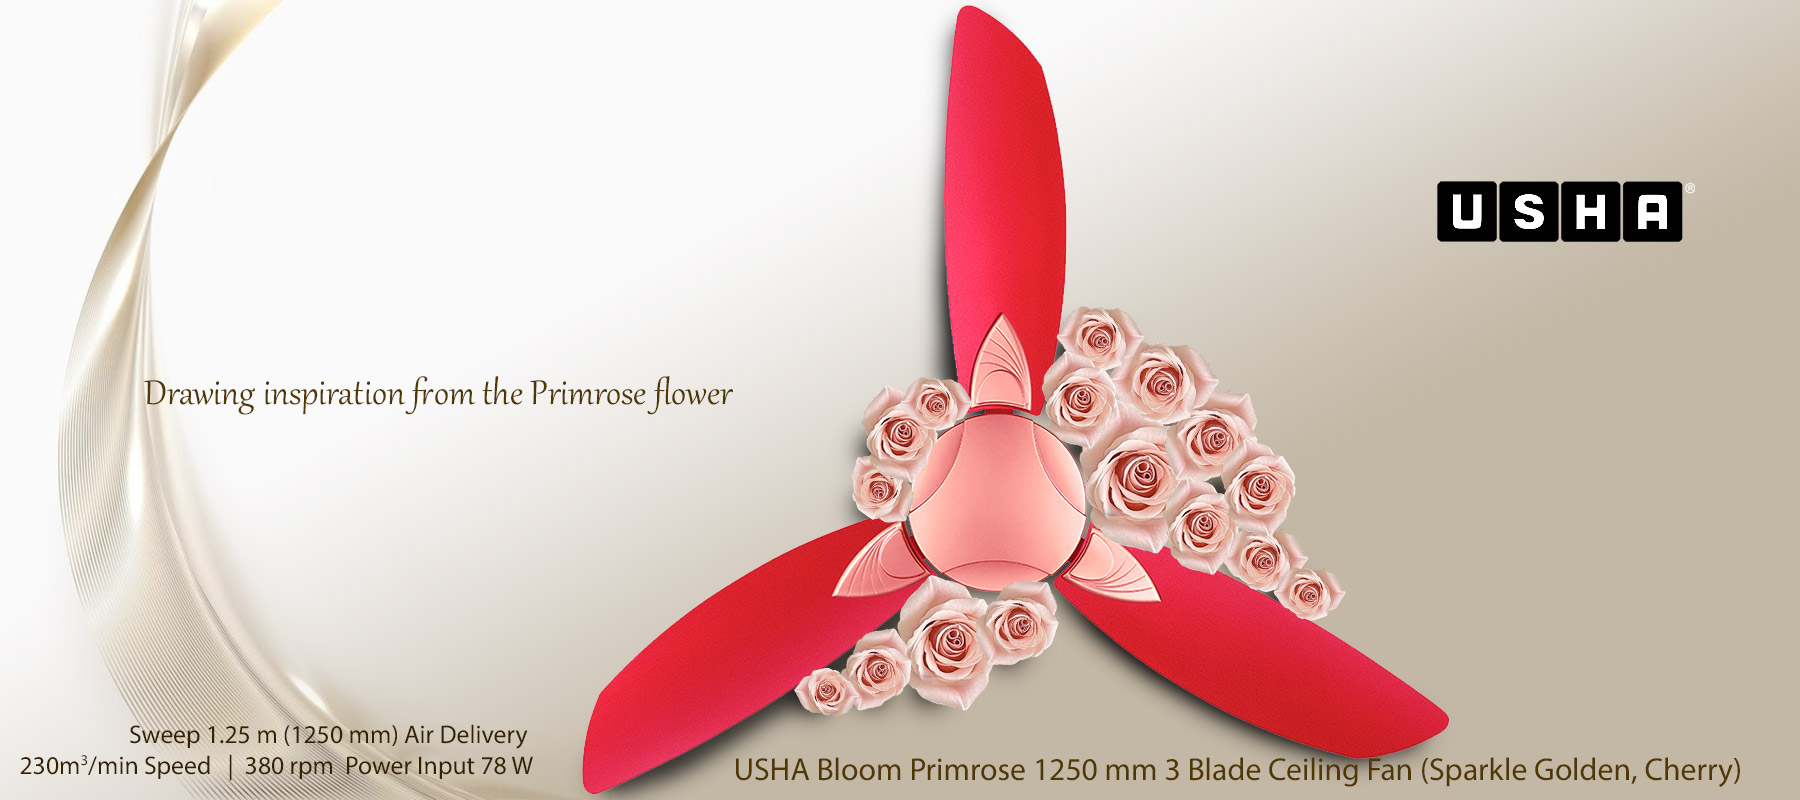 USHA Bloom Primrose 1250 mm 3 Blade Ceiling Fan (Sparkle Golden, Cherry)